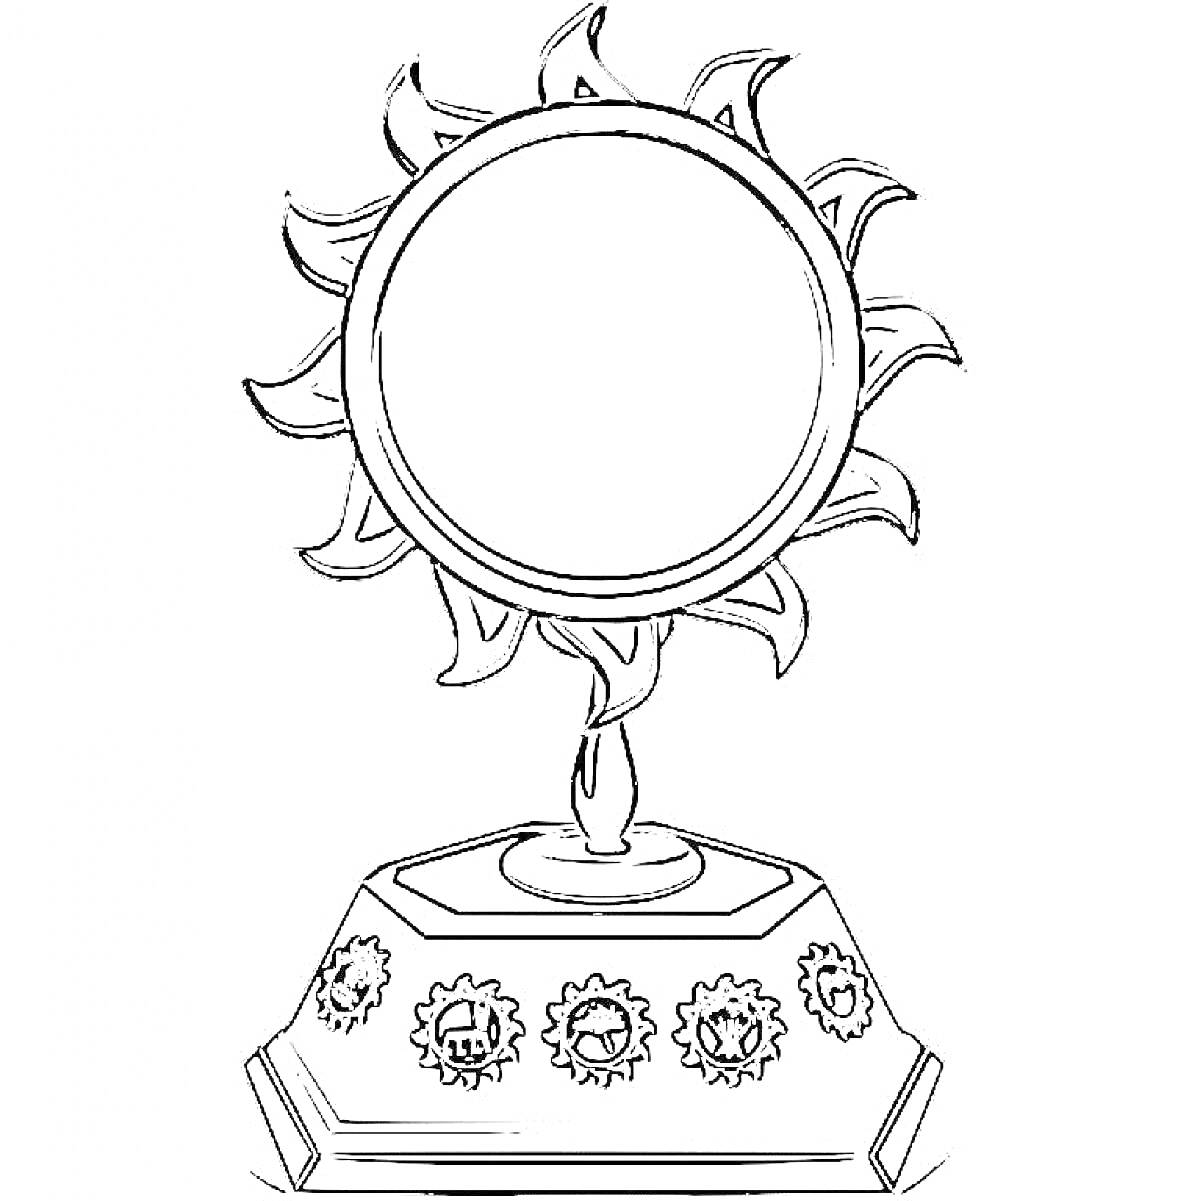 Кубок с солнцем на подставке с гравировкой зубчатых колес